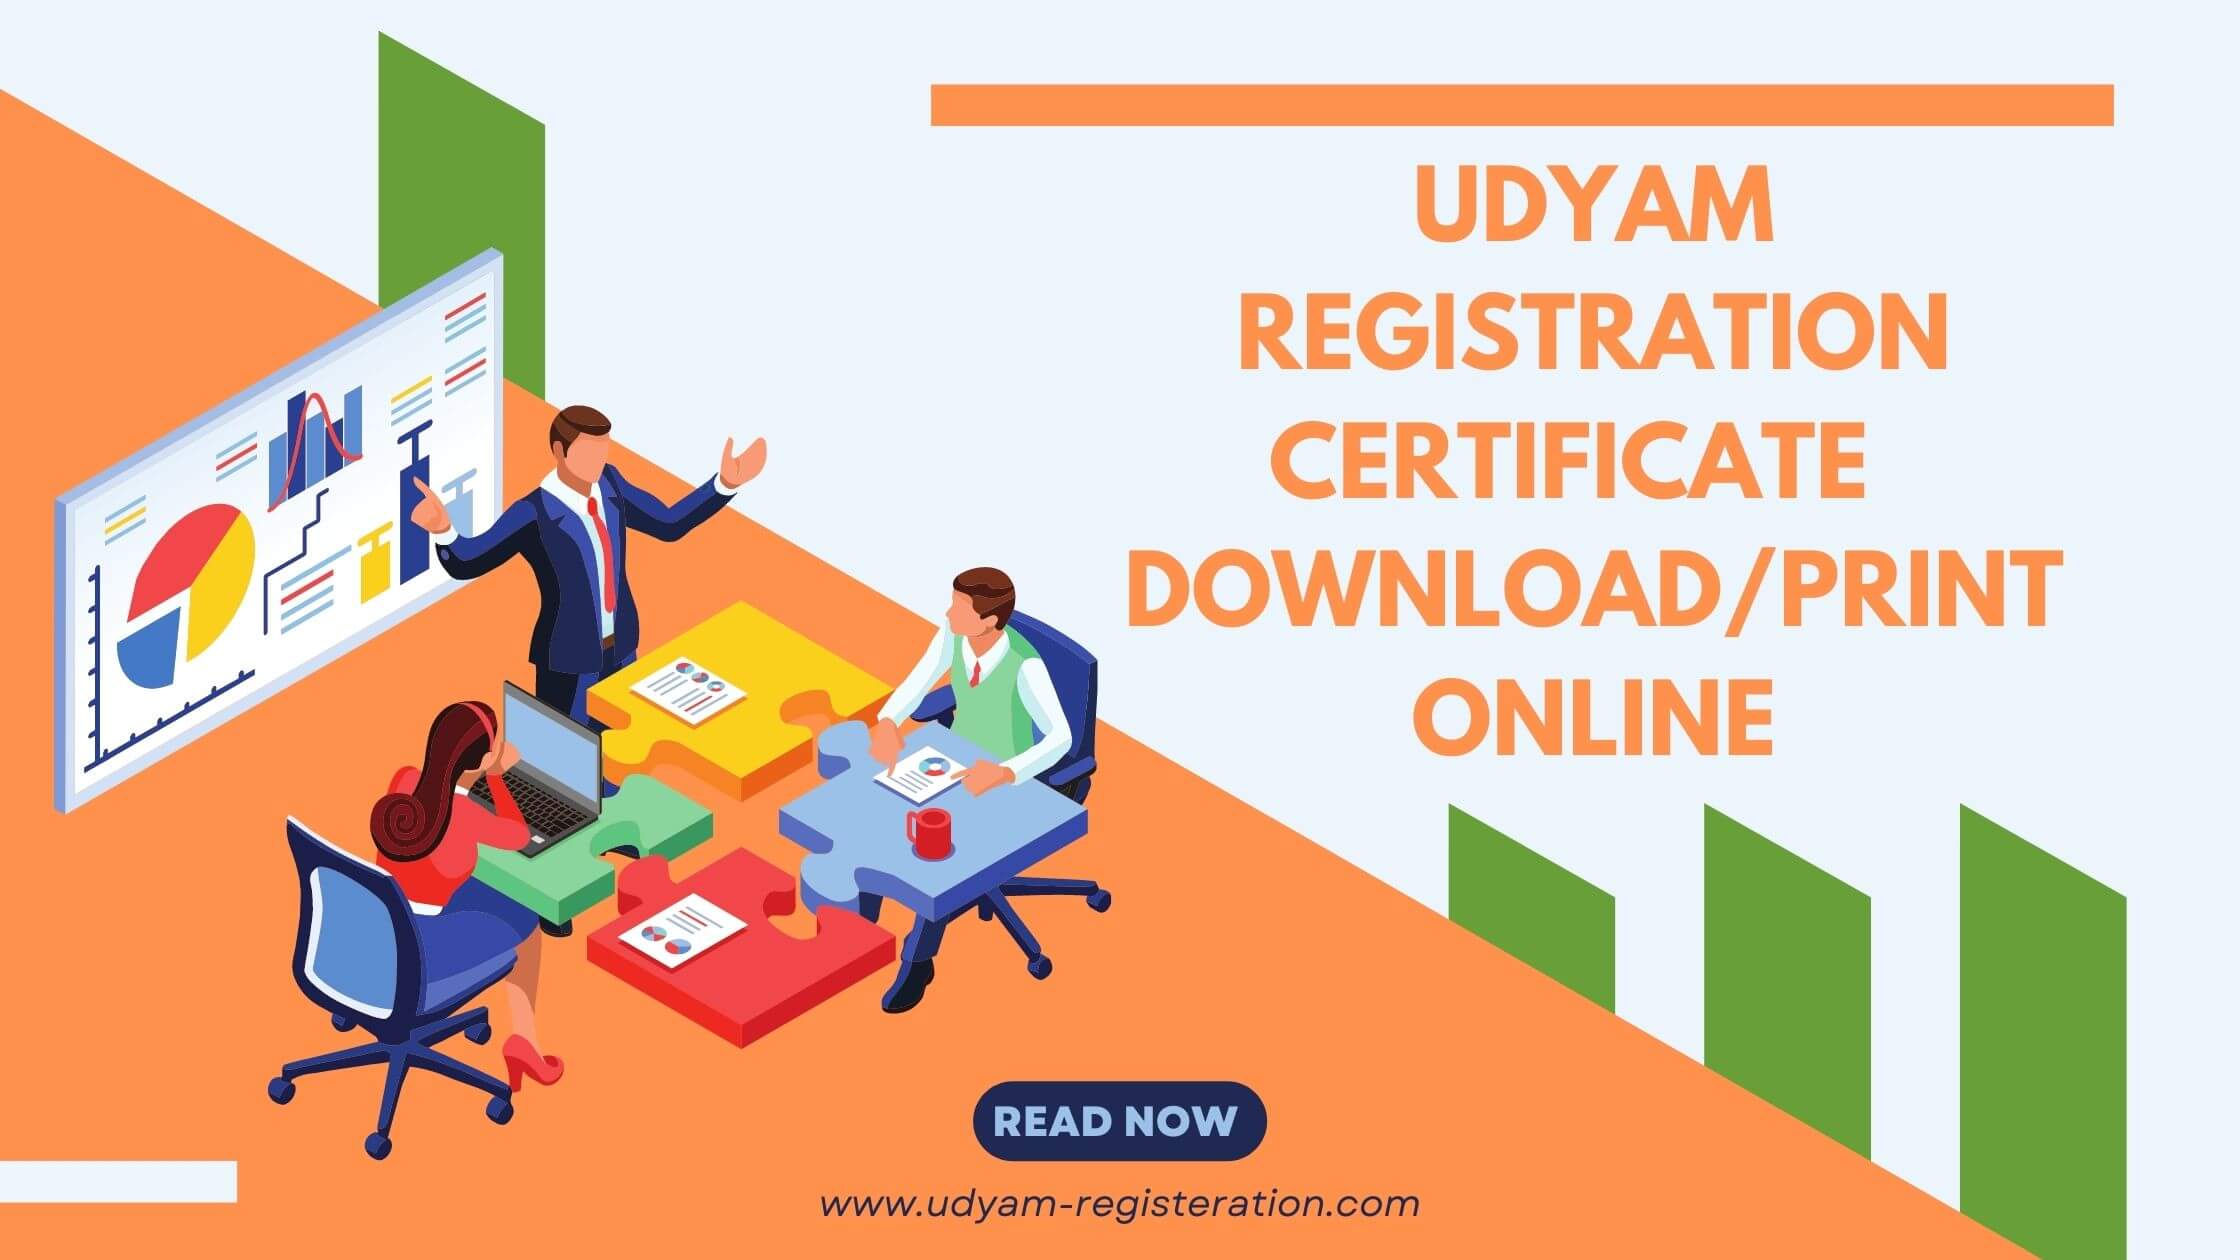 Download/Print Udyam Registration Certificate Online